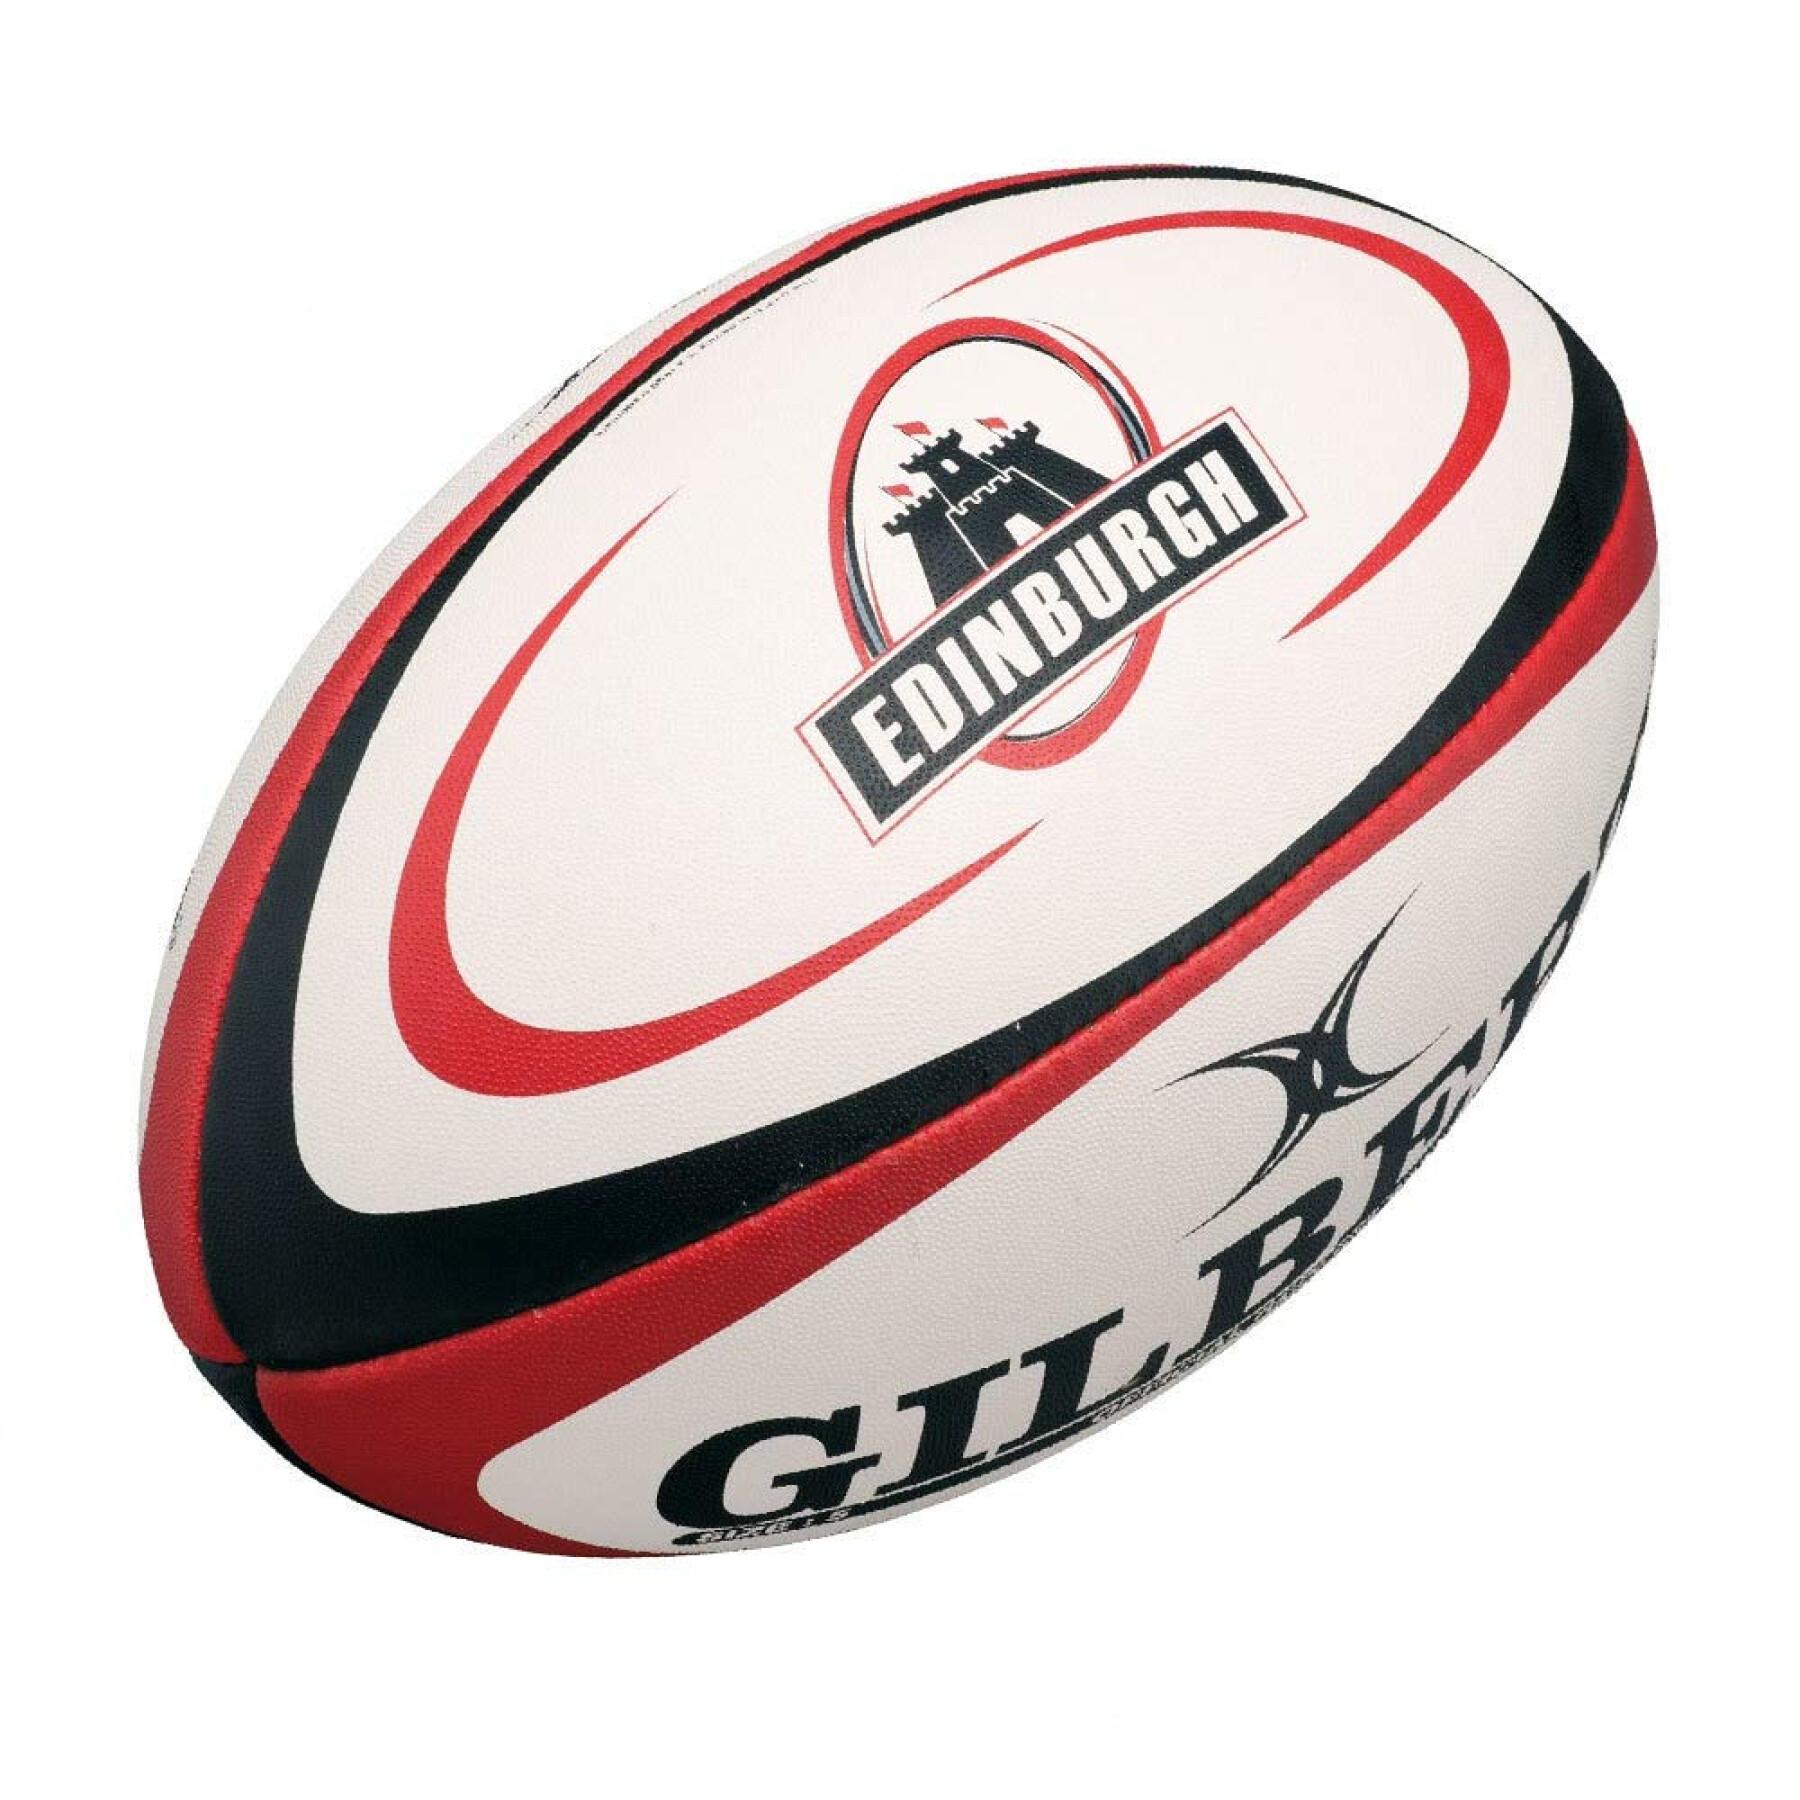 Rugbyball midi Gilbert Edimbourg (taille 2)